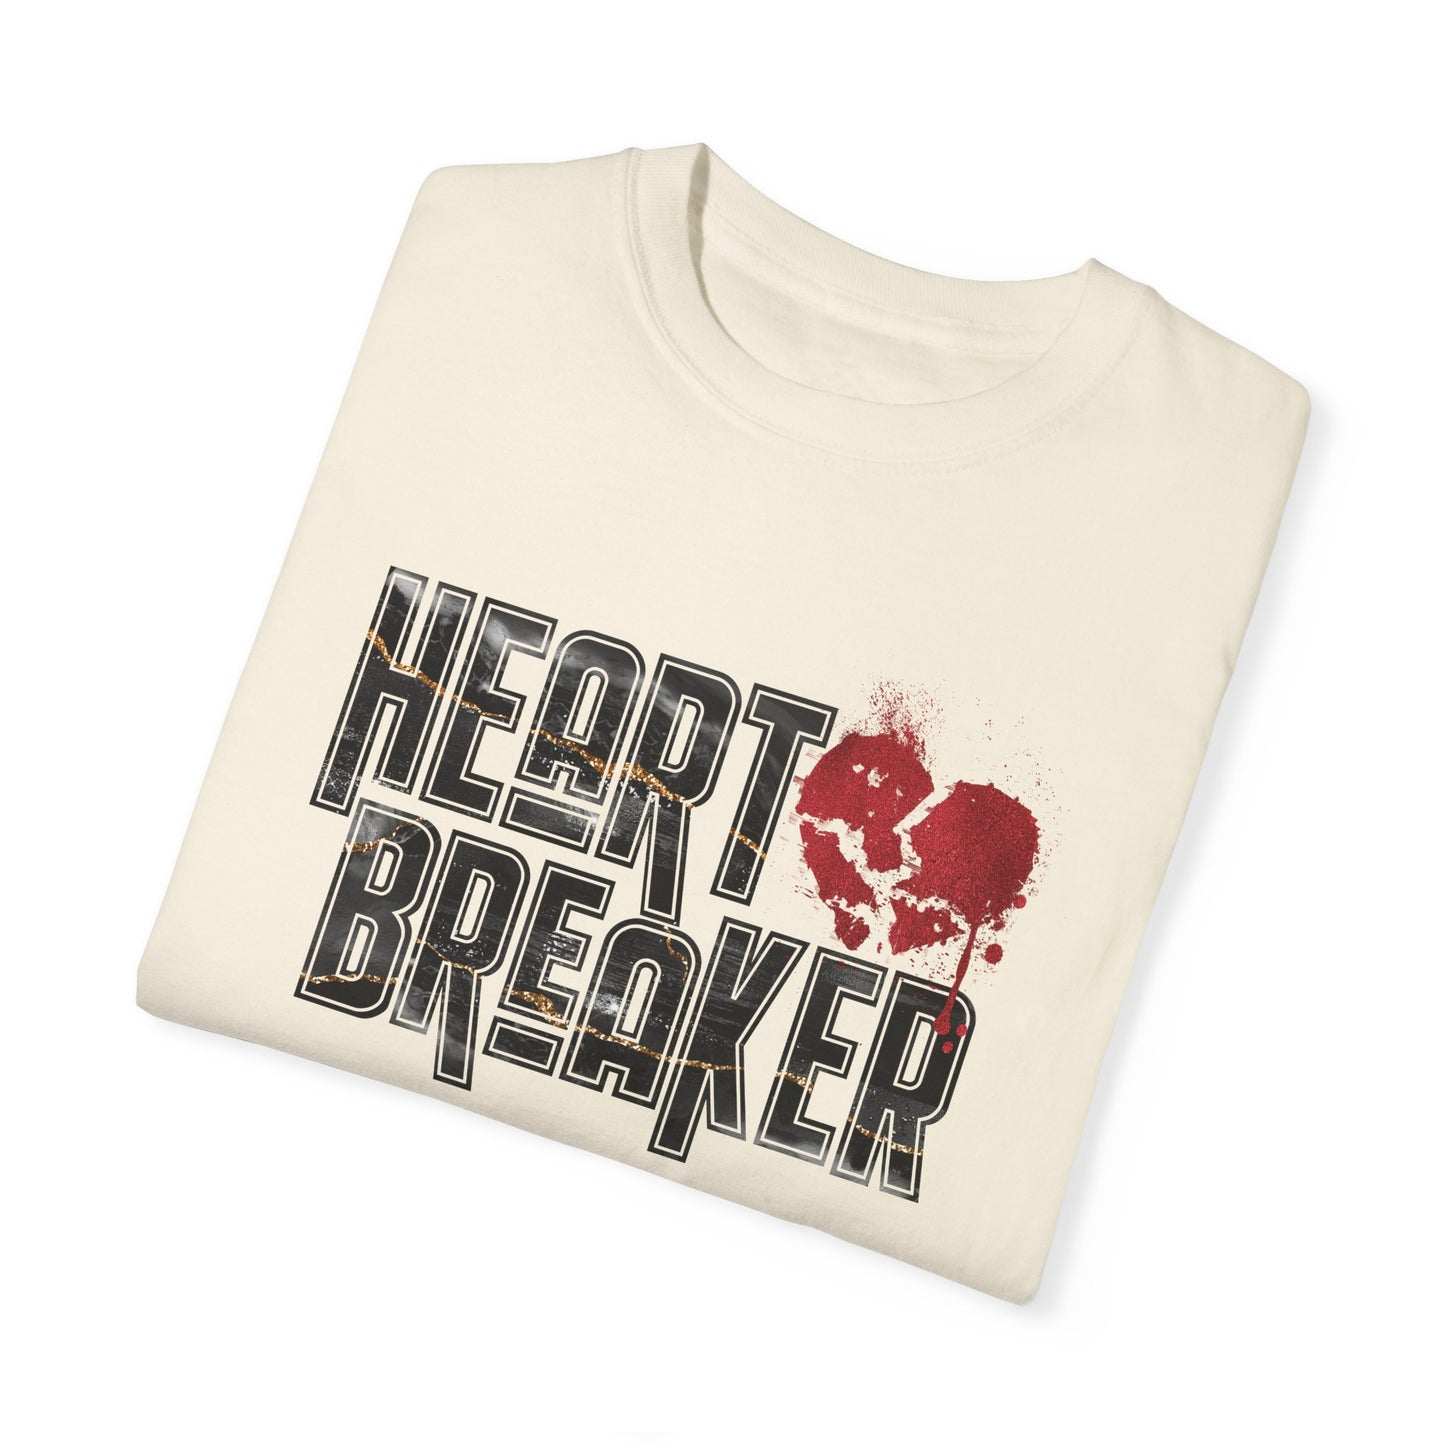 Heart Breaker, Vintage Style Valentine's Day Tee, Unisex Comfort Colors T-shirt